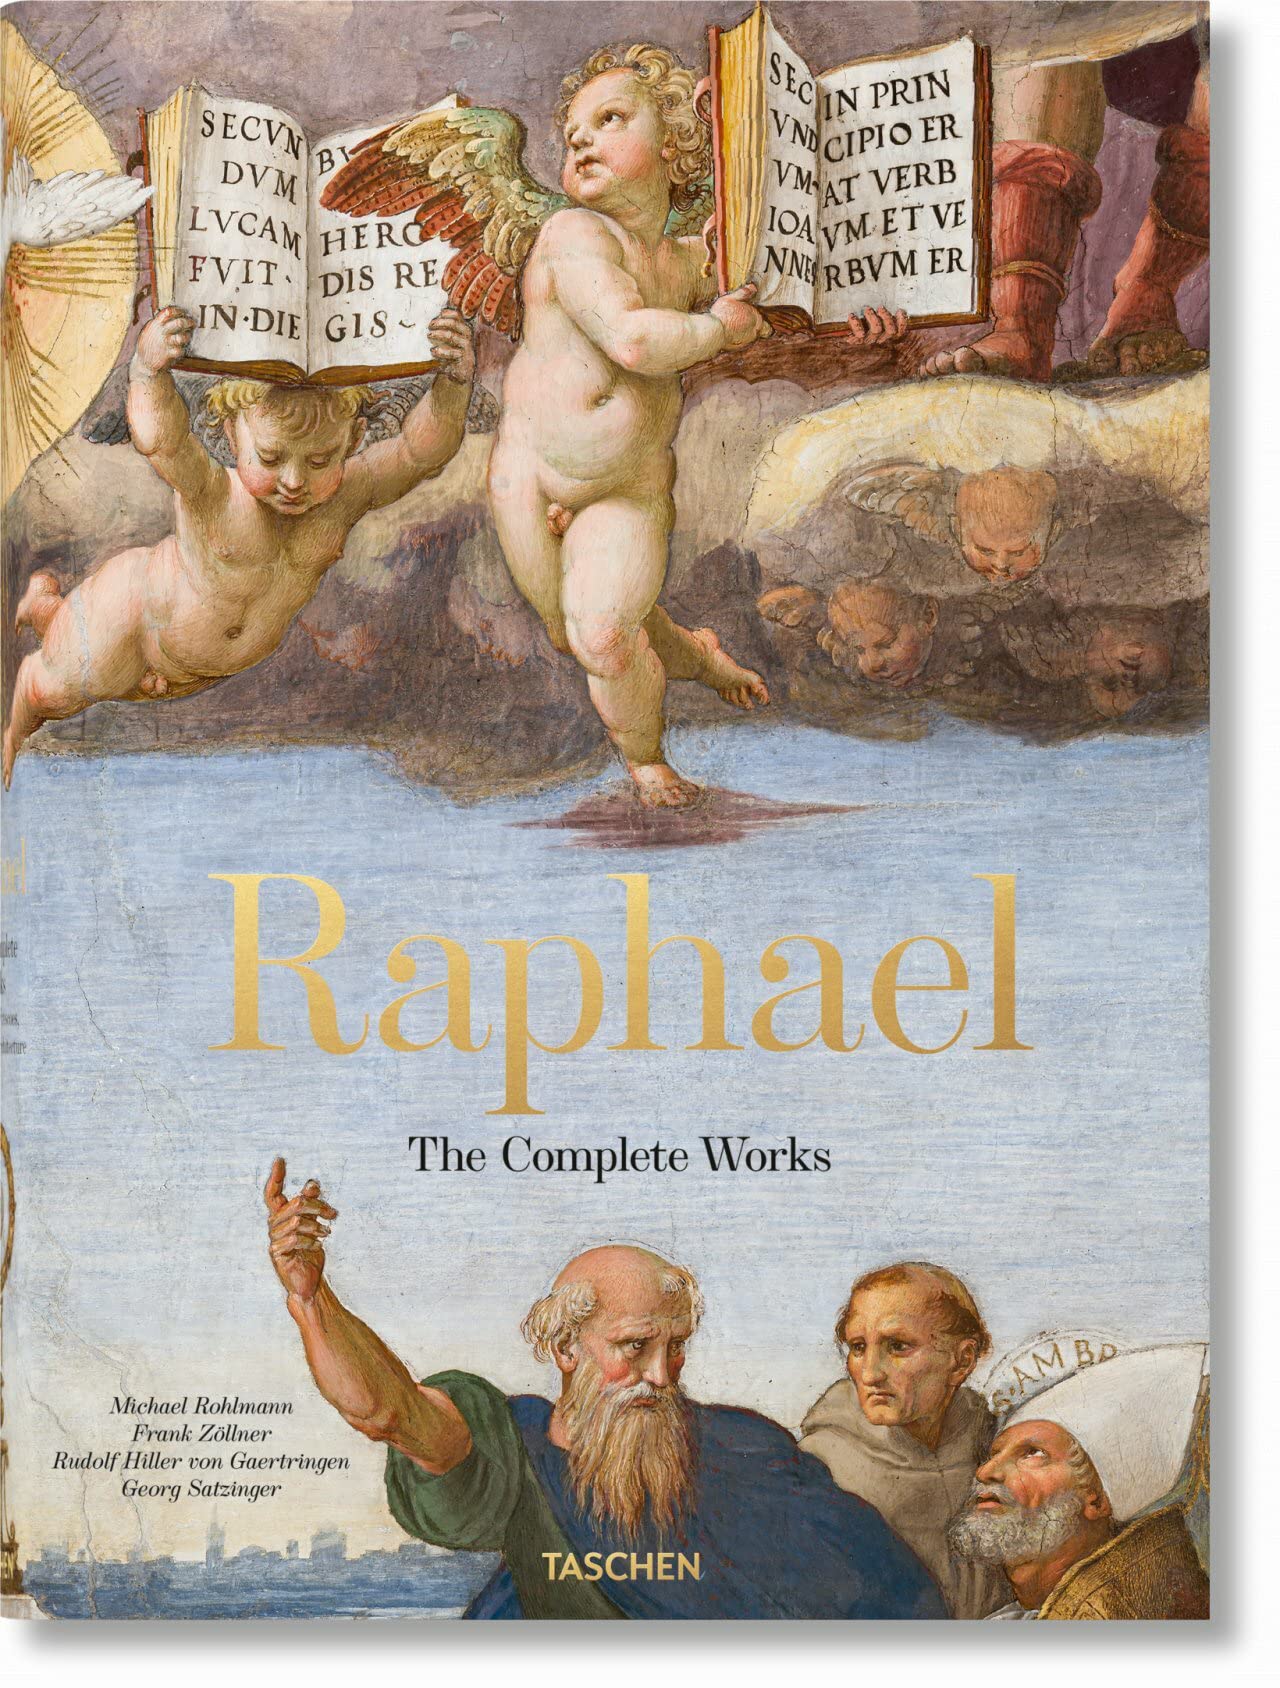 Raphael. The Complete Works | Michael Rohlmann, Frank Zollner, Rudolf Hiller von Gaertringen, Georg Satzinger